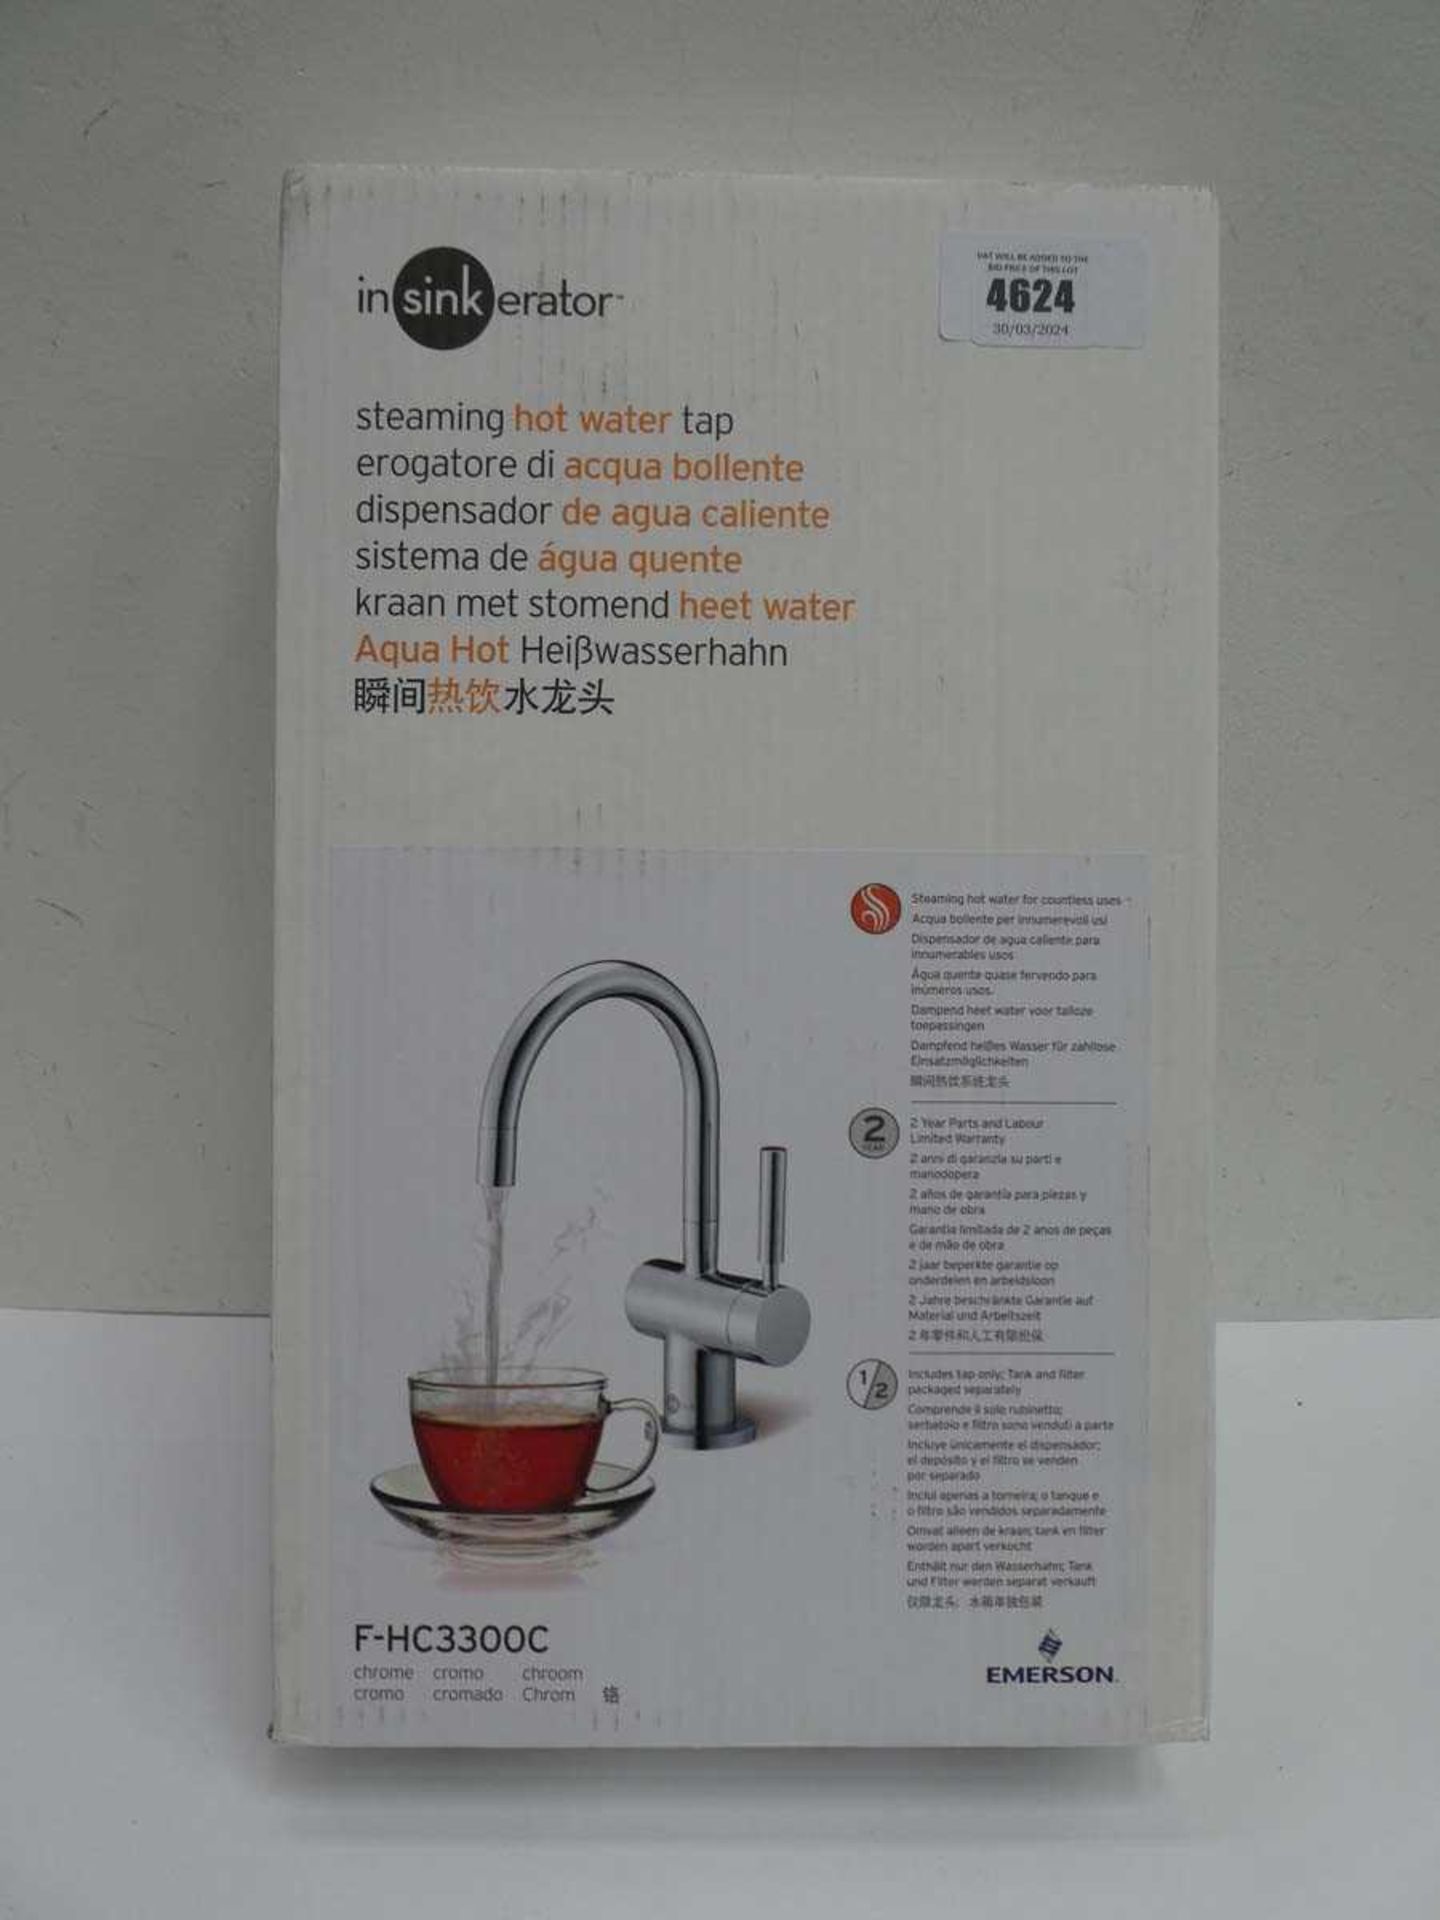 +VAT Insinkerator steaming hot water tap